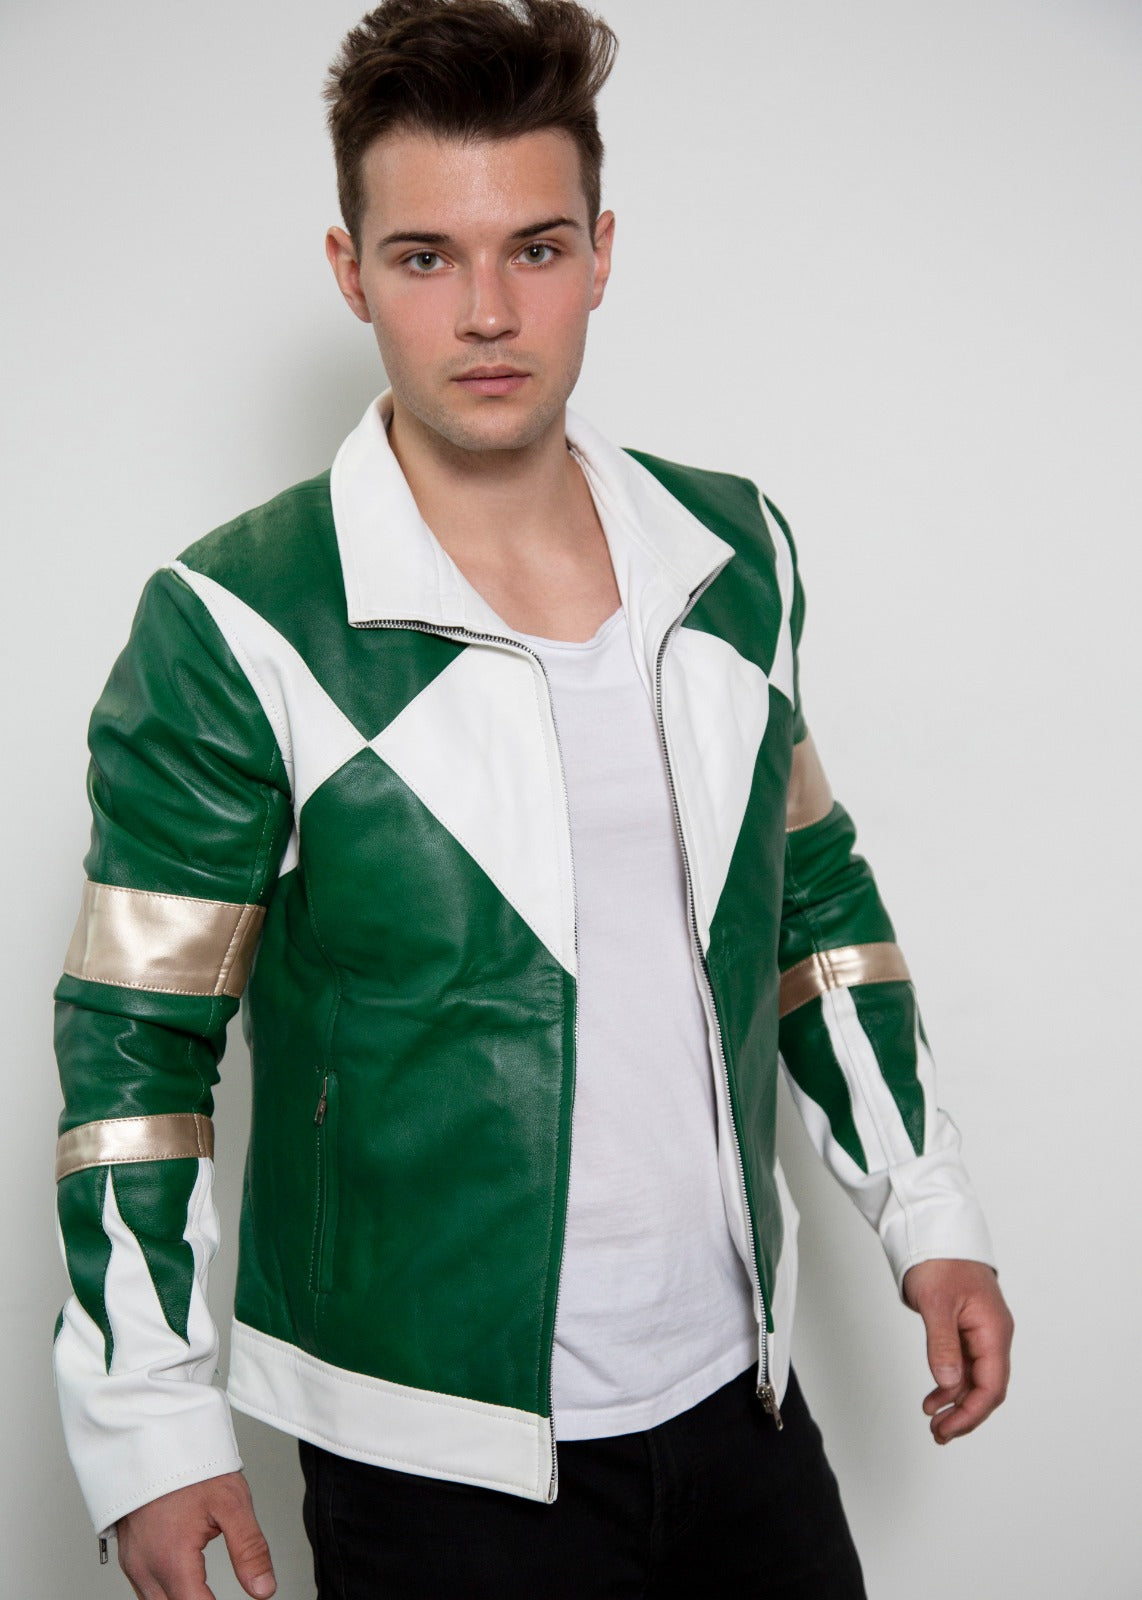 Green Power Ranger Leather Jacket MMPR Cosplay Costume Jason David Frank